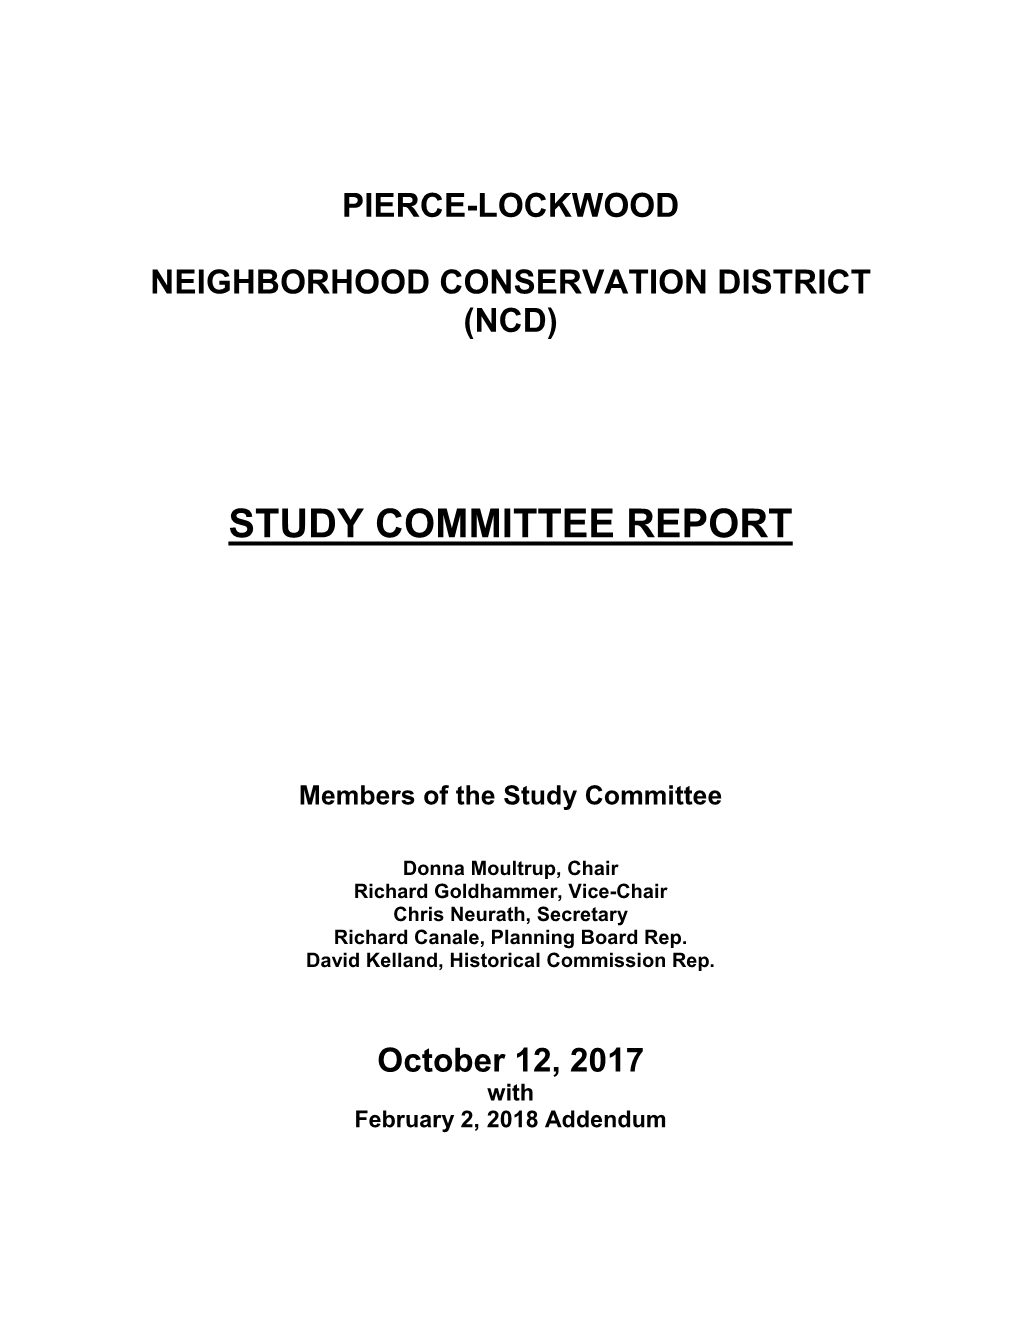 Study Committee Report